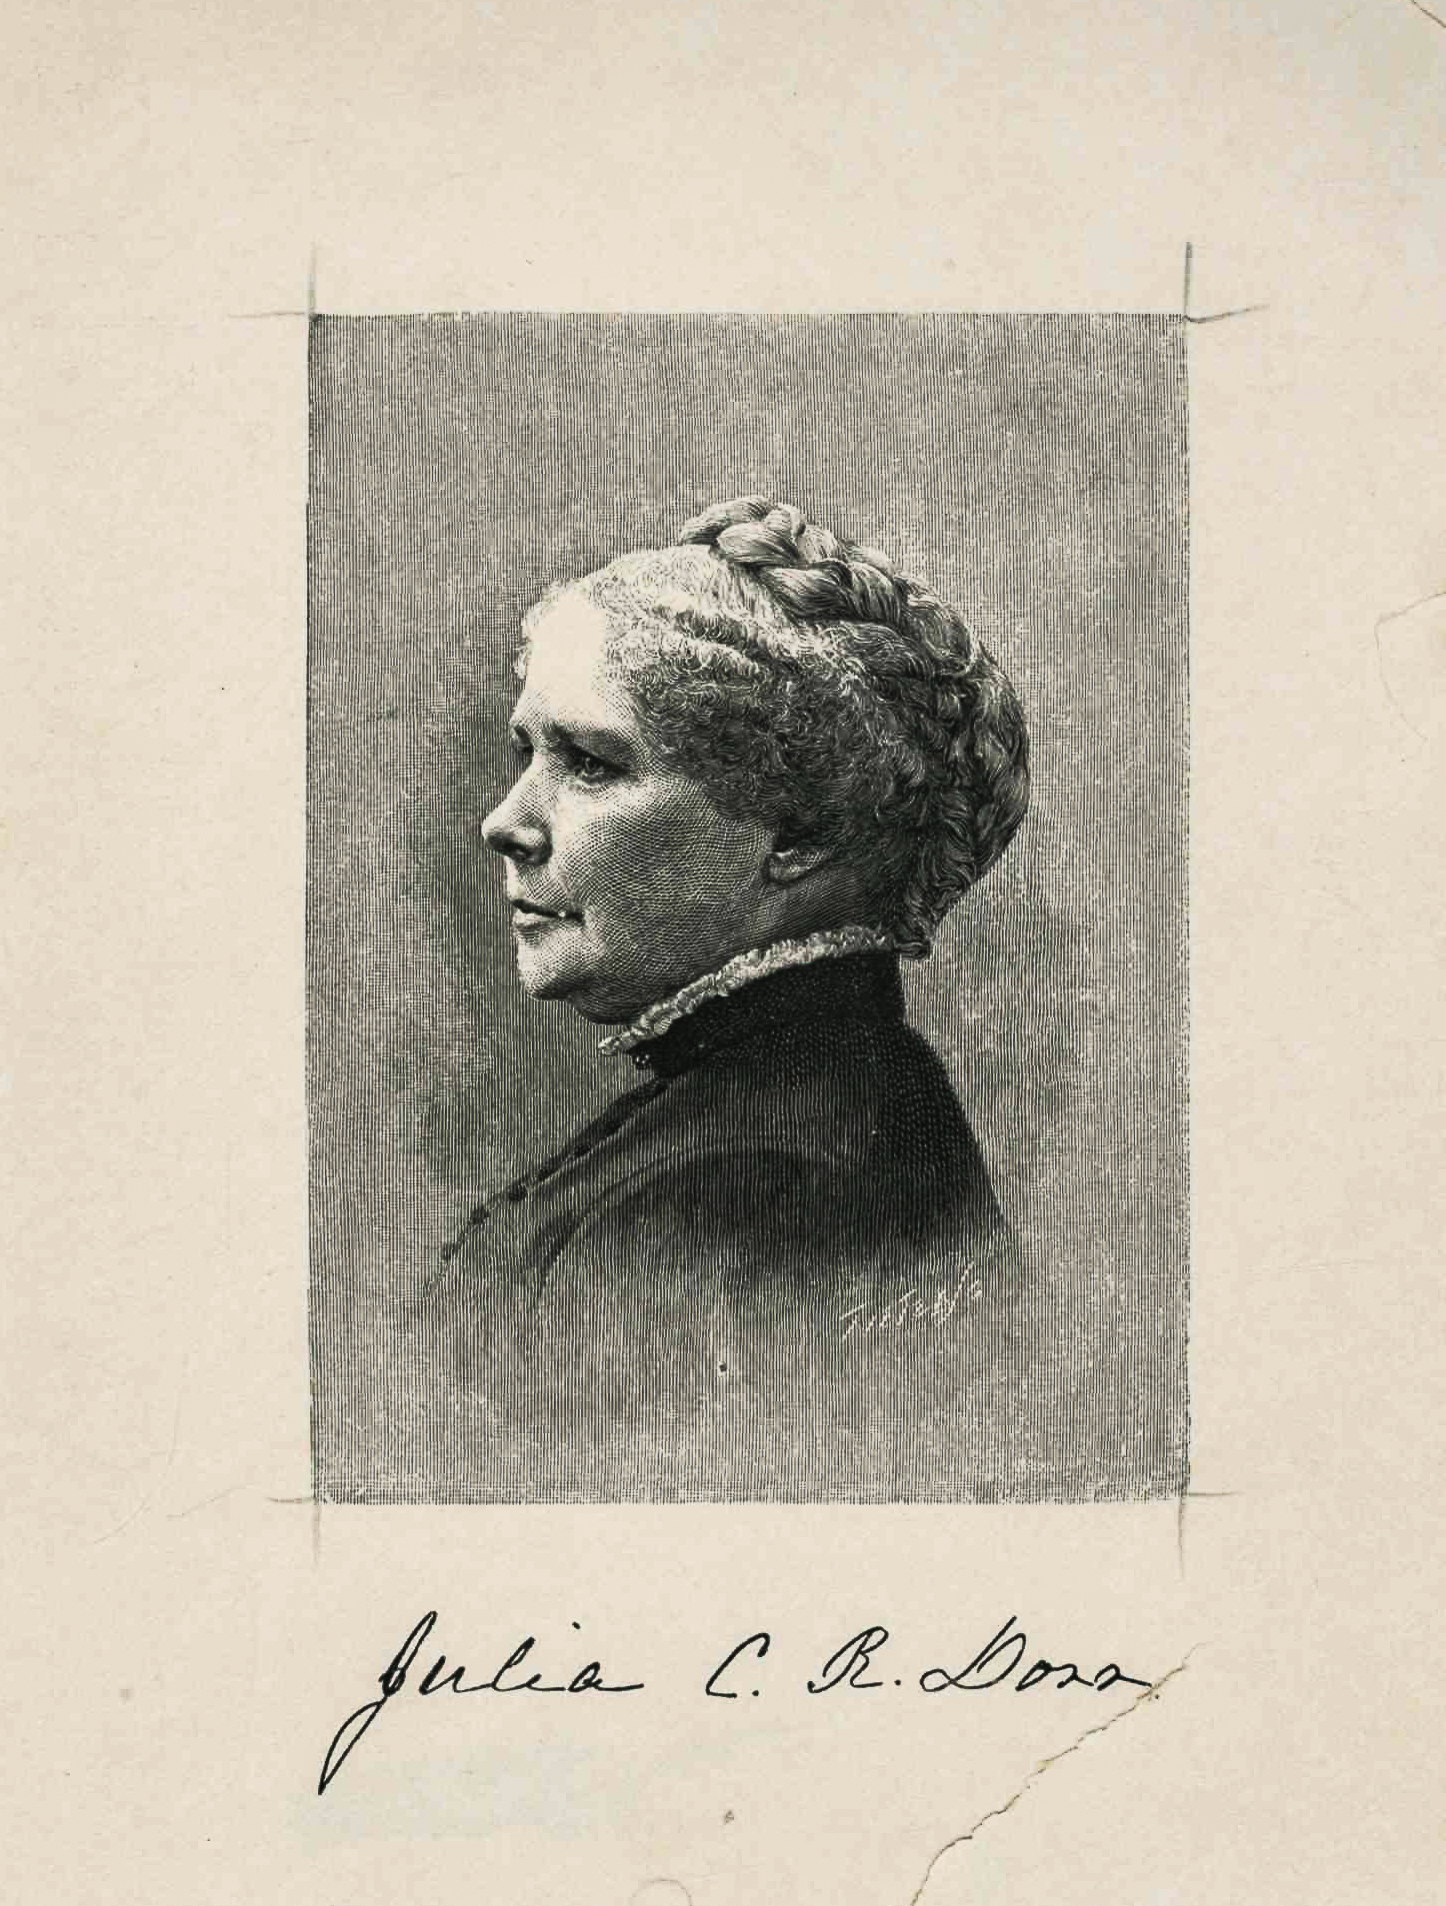 Julia C. R. Dorr